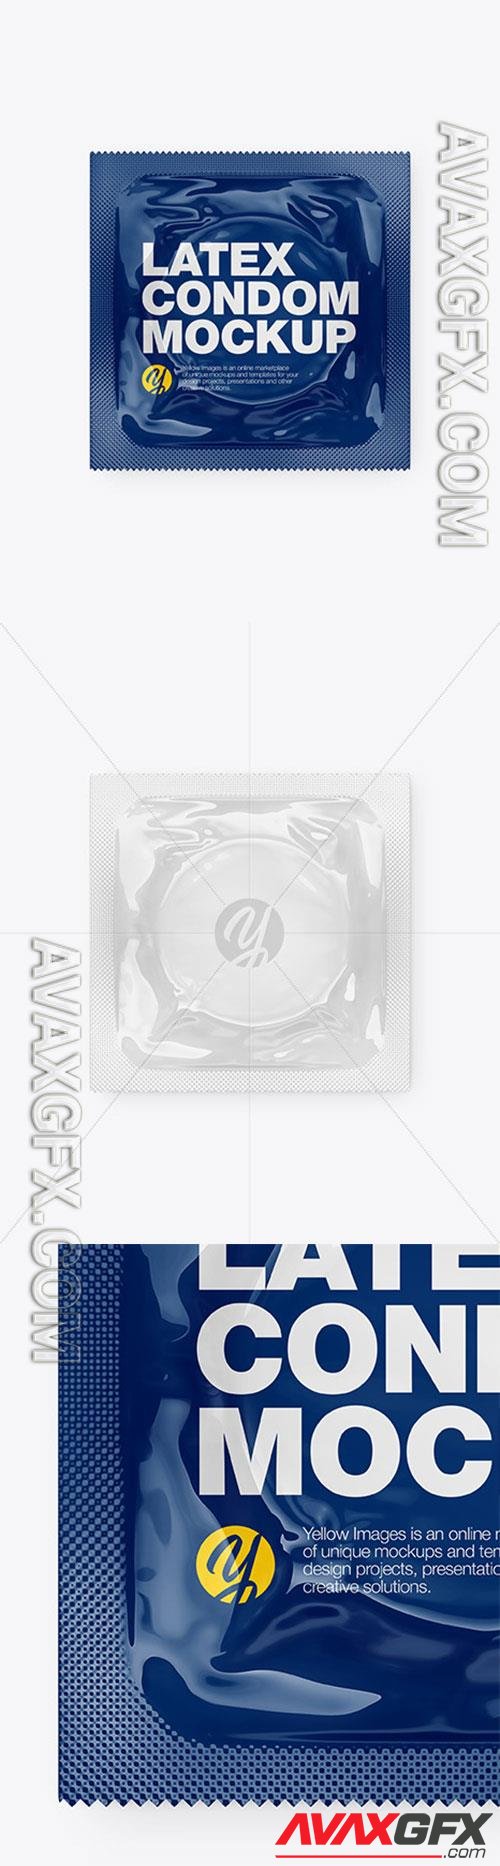 Glossy Square Condom Packaging Mockup 86388 TIF